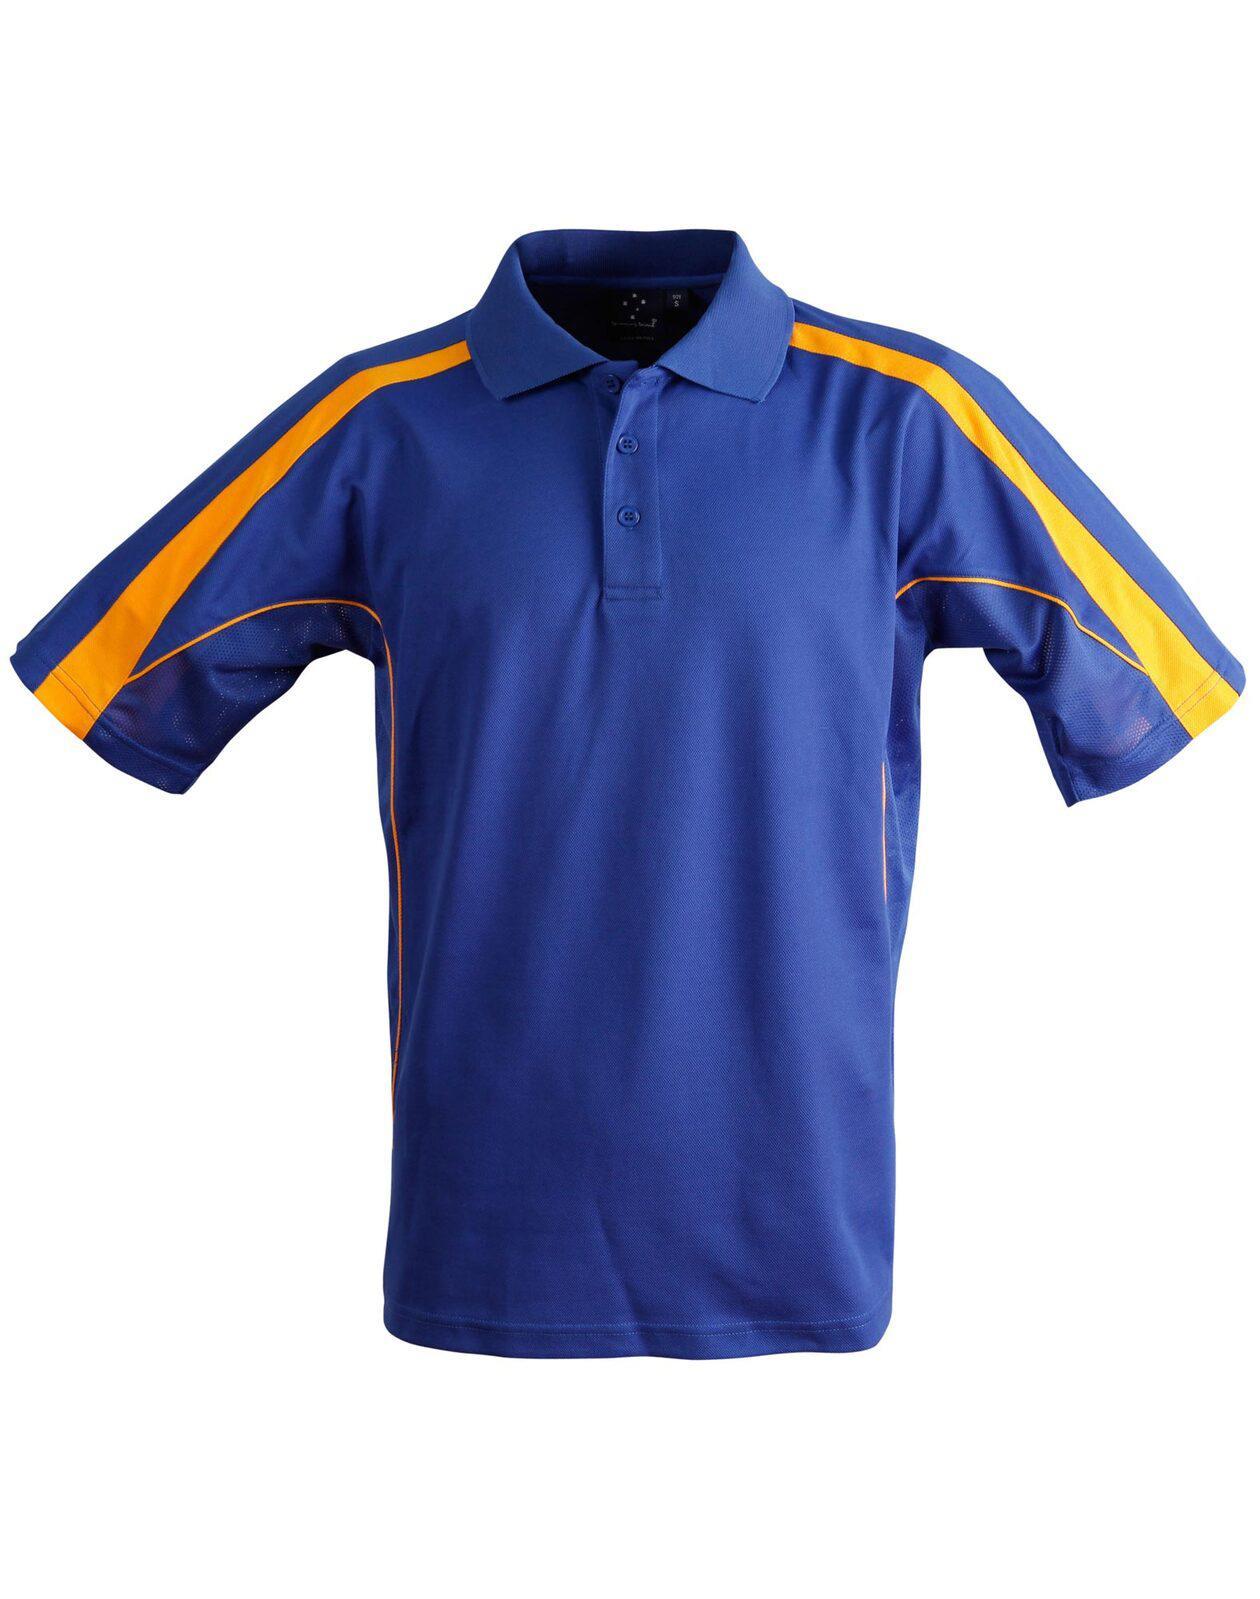 PS53K Sz 04K LEGEND Polyester Cotton Kid's Polo Shirt Royal Blue/Gold